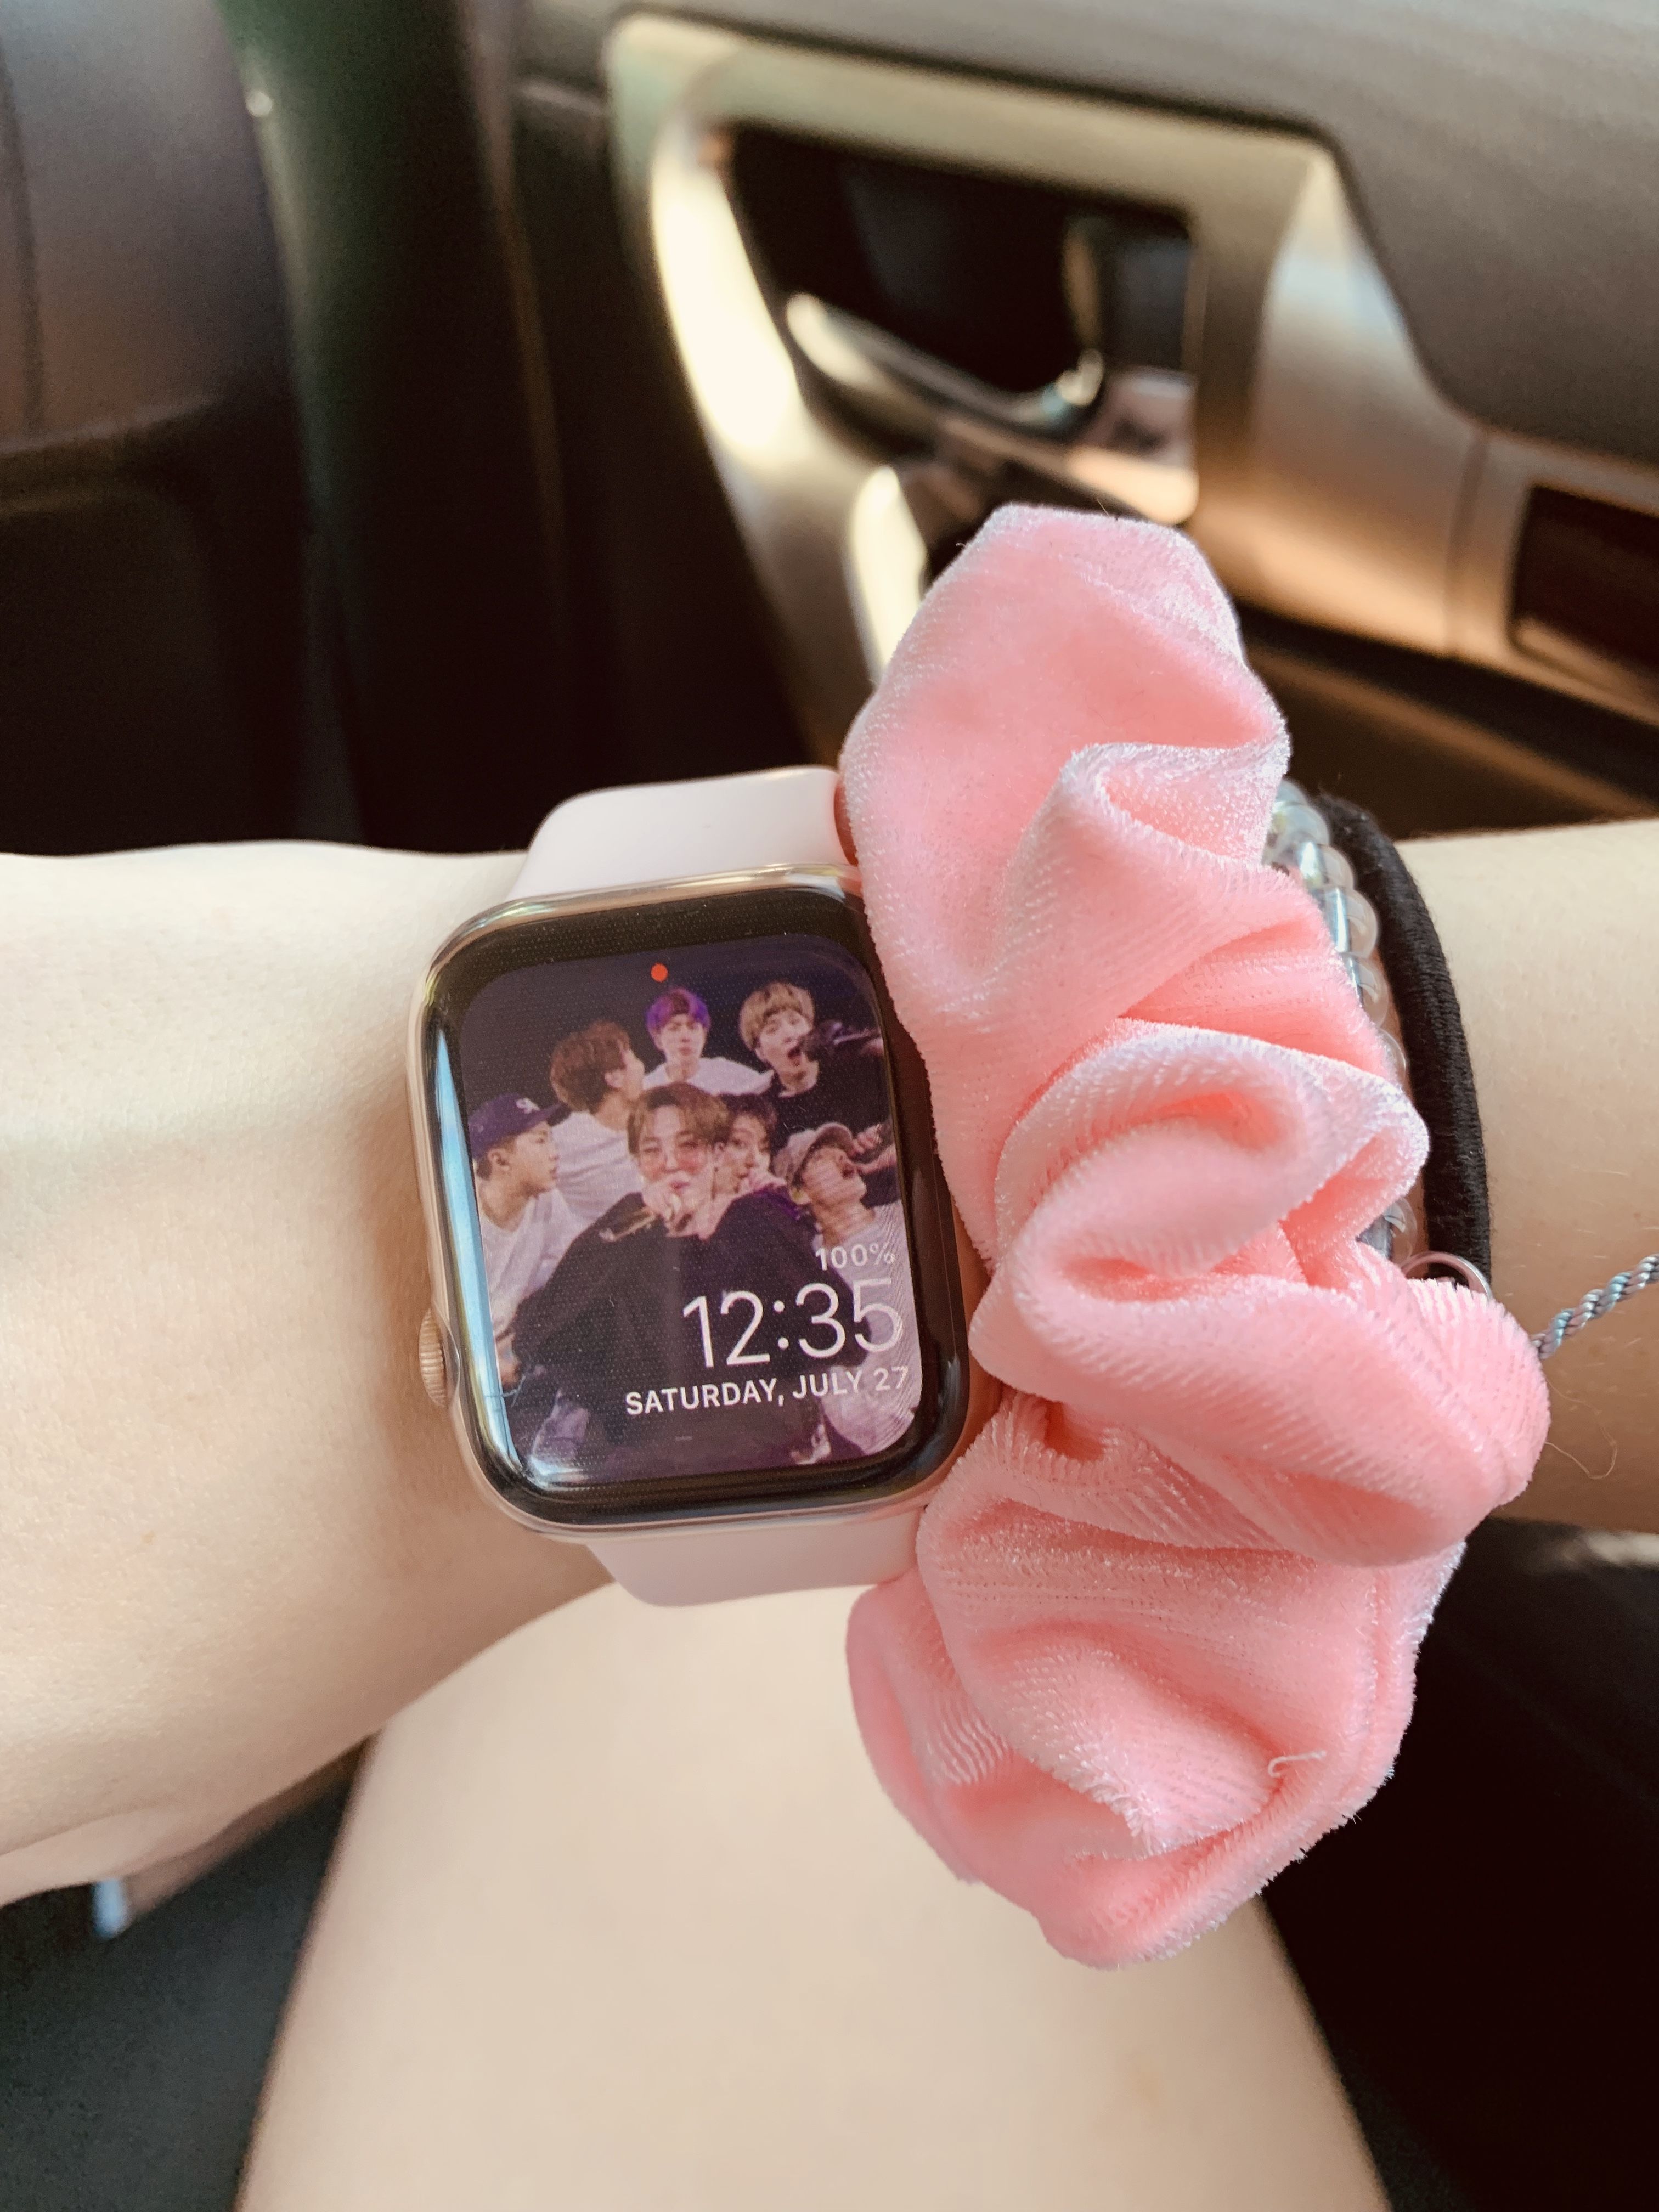 BTS Apple Watch Wallpaper. Apple watch wallpaper, Apple watch fashion, Apple watch